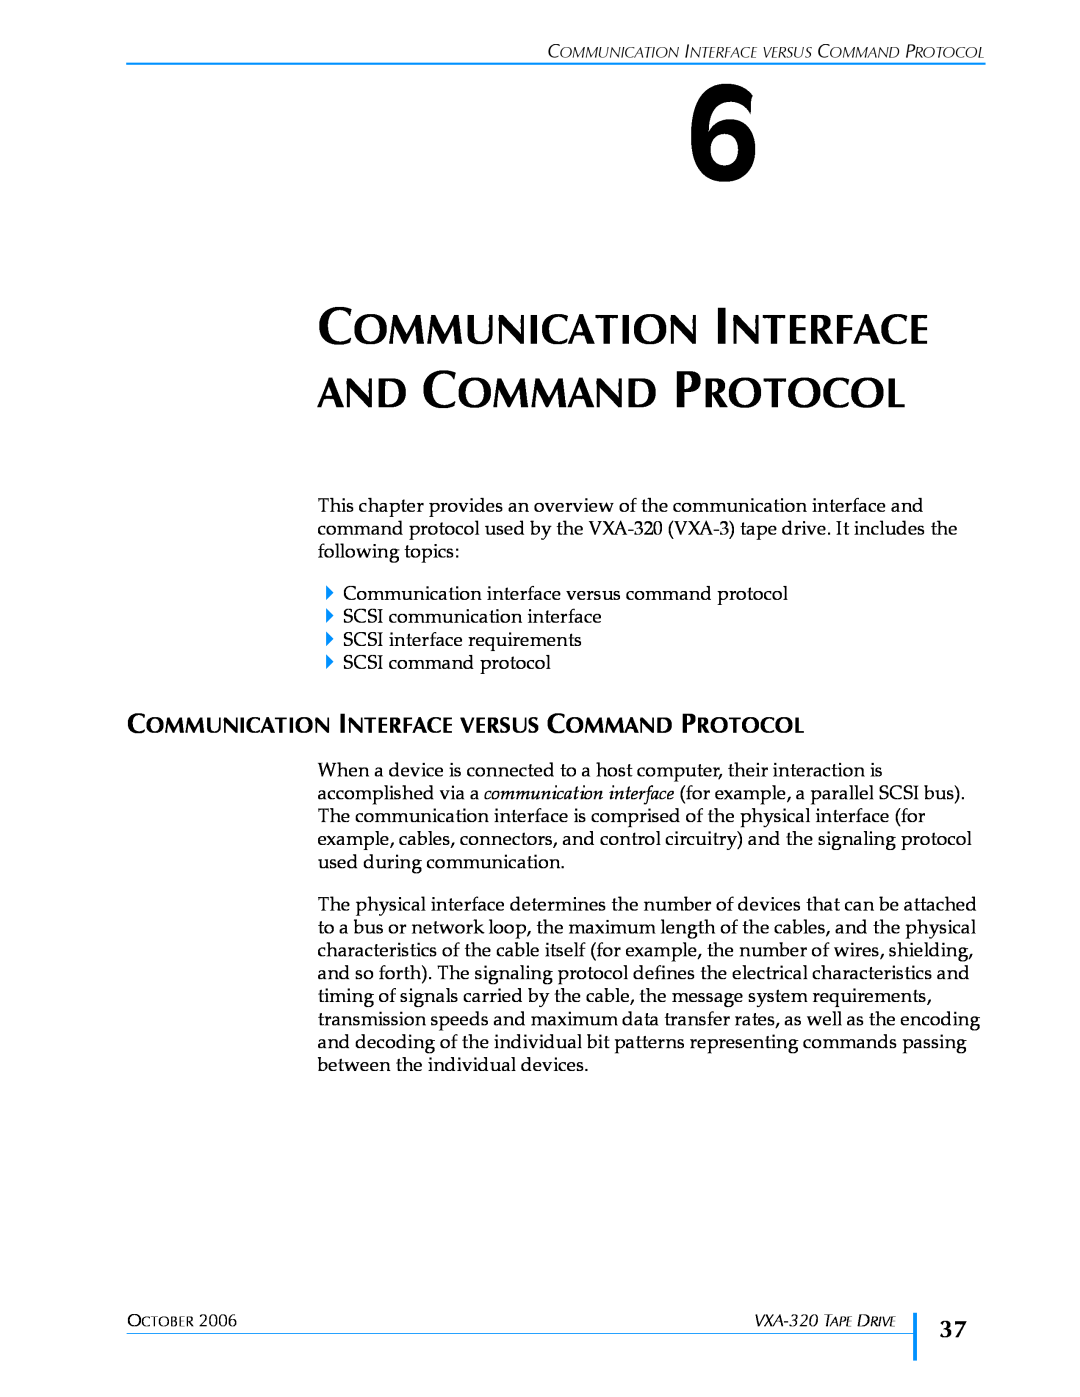 Tandberg Data VXA-320 (VXA-3) manual Communication Interface And Command Protocol 